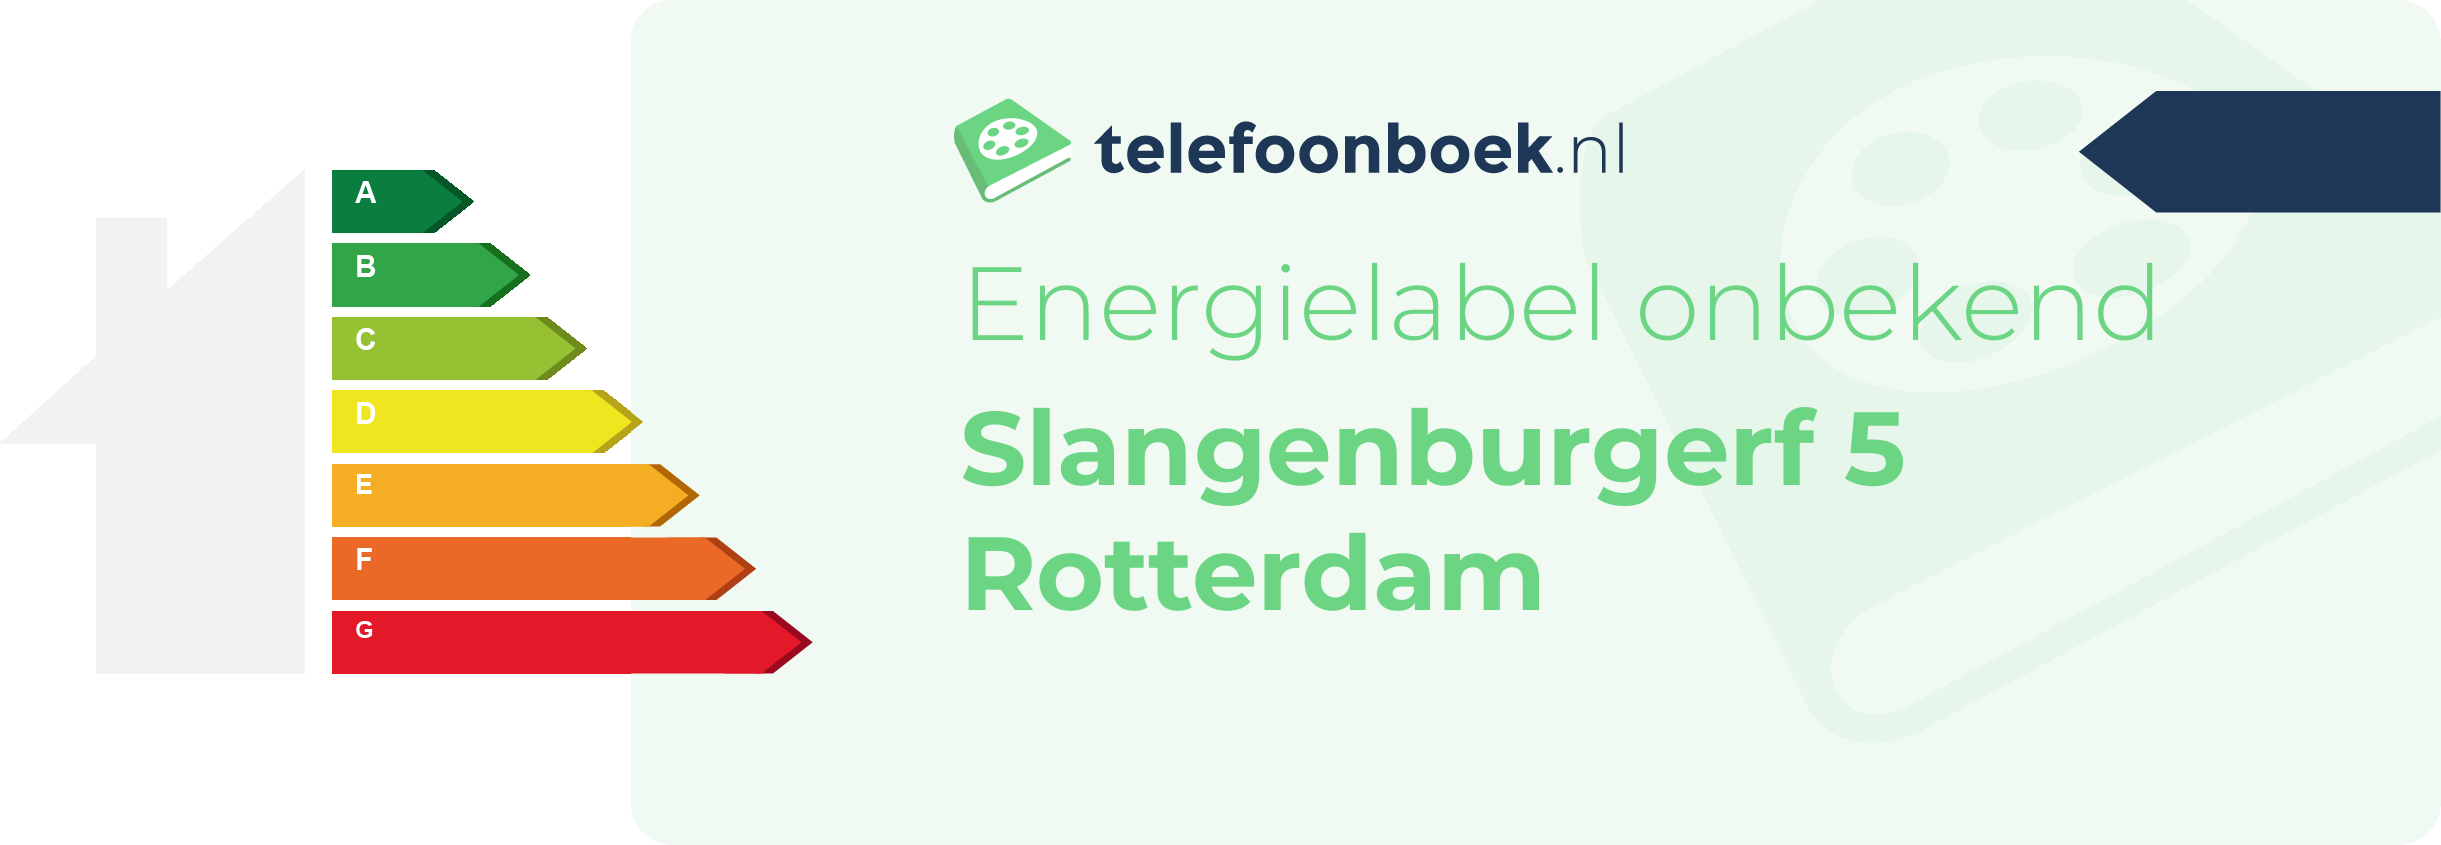 Energielabel Slangenburgerf 5 Rotterdam